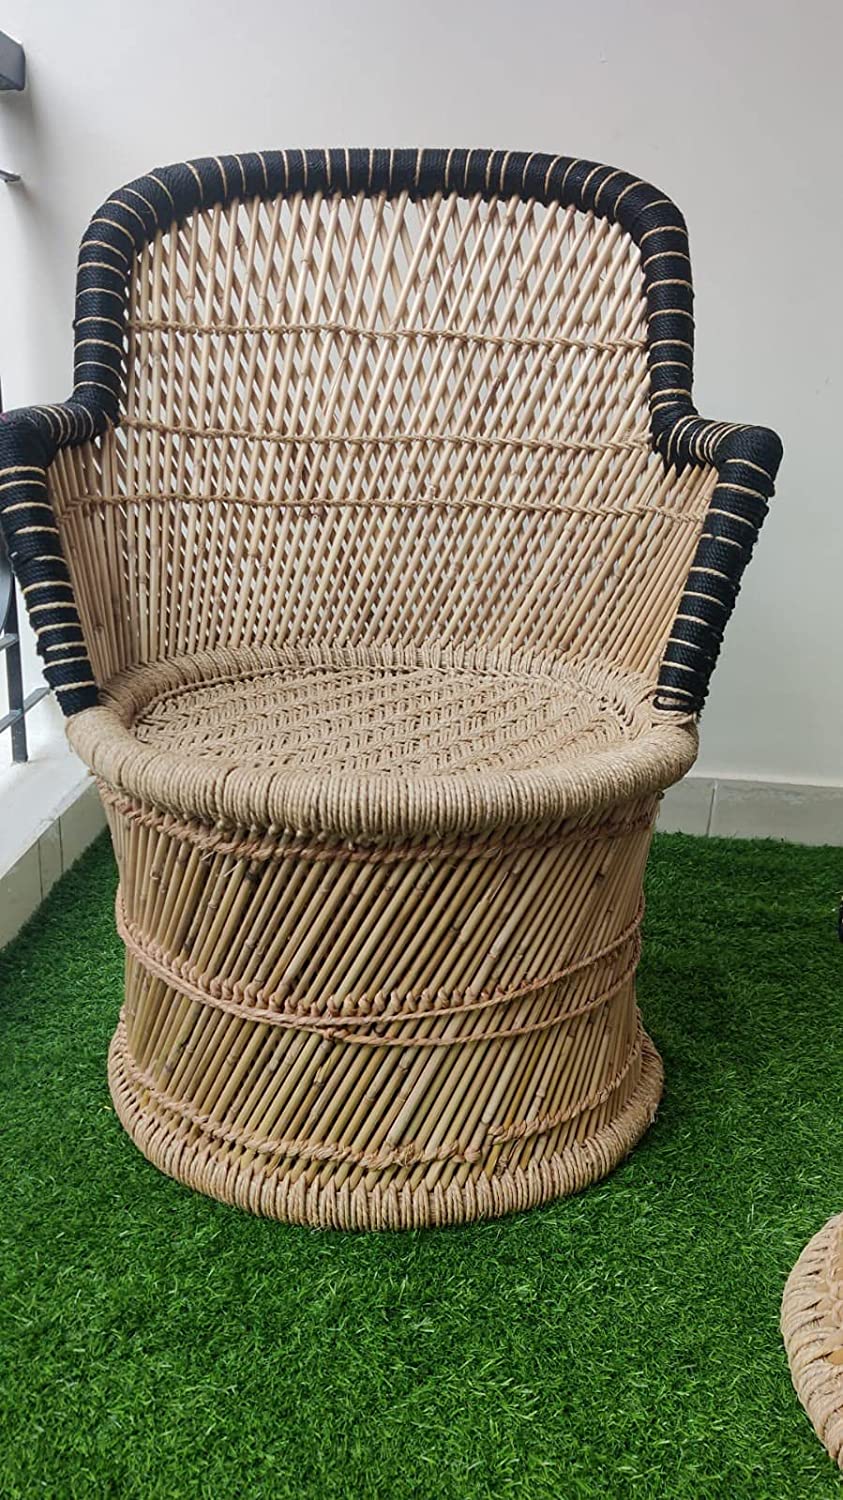 Handmakers ! Black & Beige Bamboo (SARKANDA) Chair